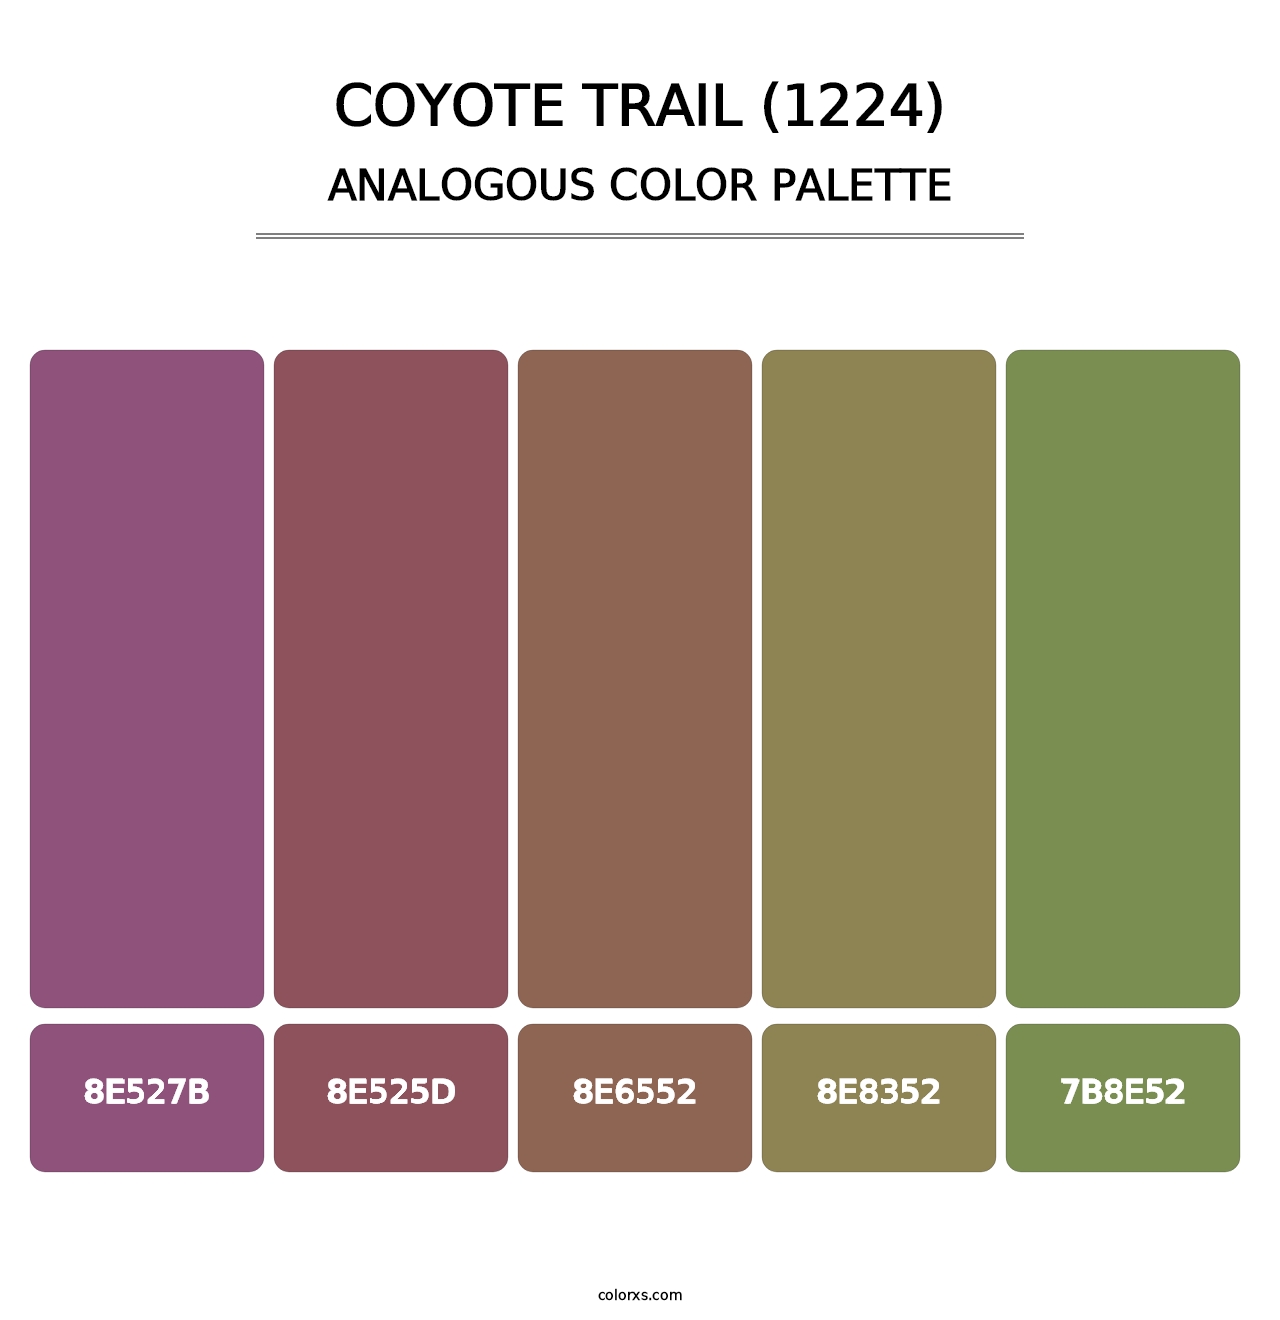 Coyote Trail (1224) - Analogous Color Palette